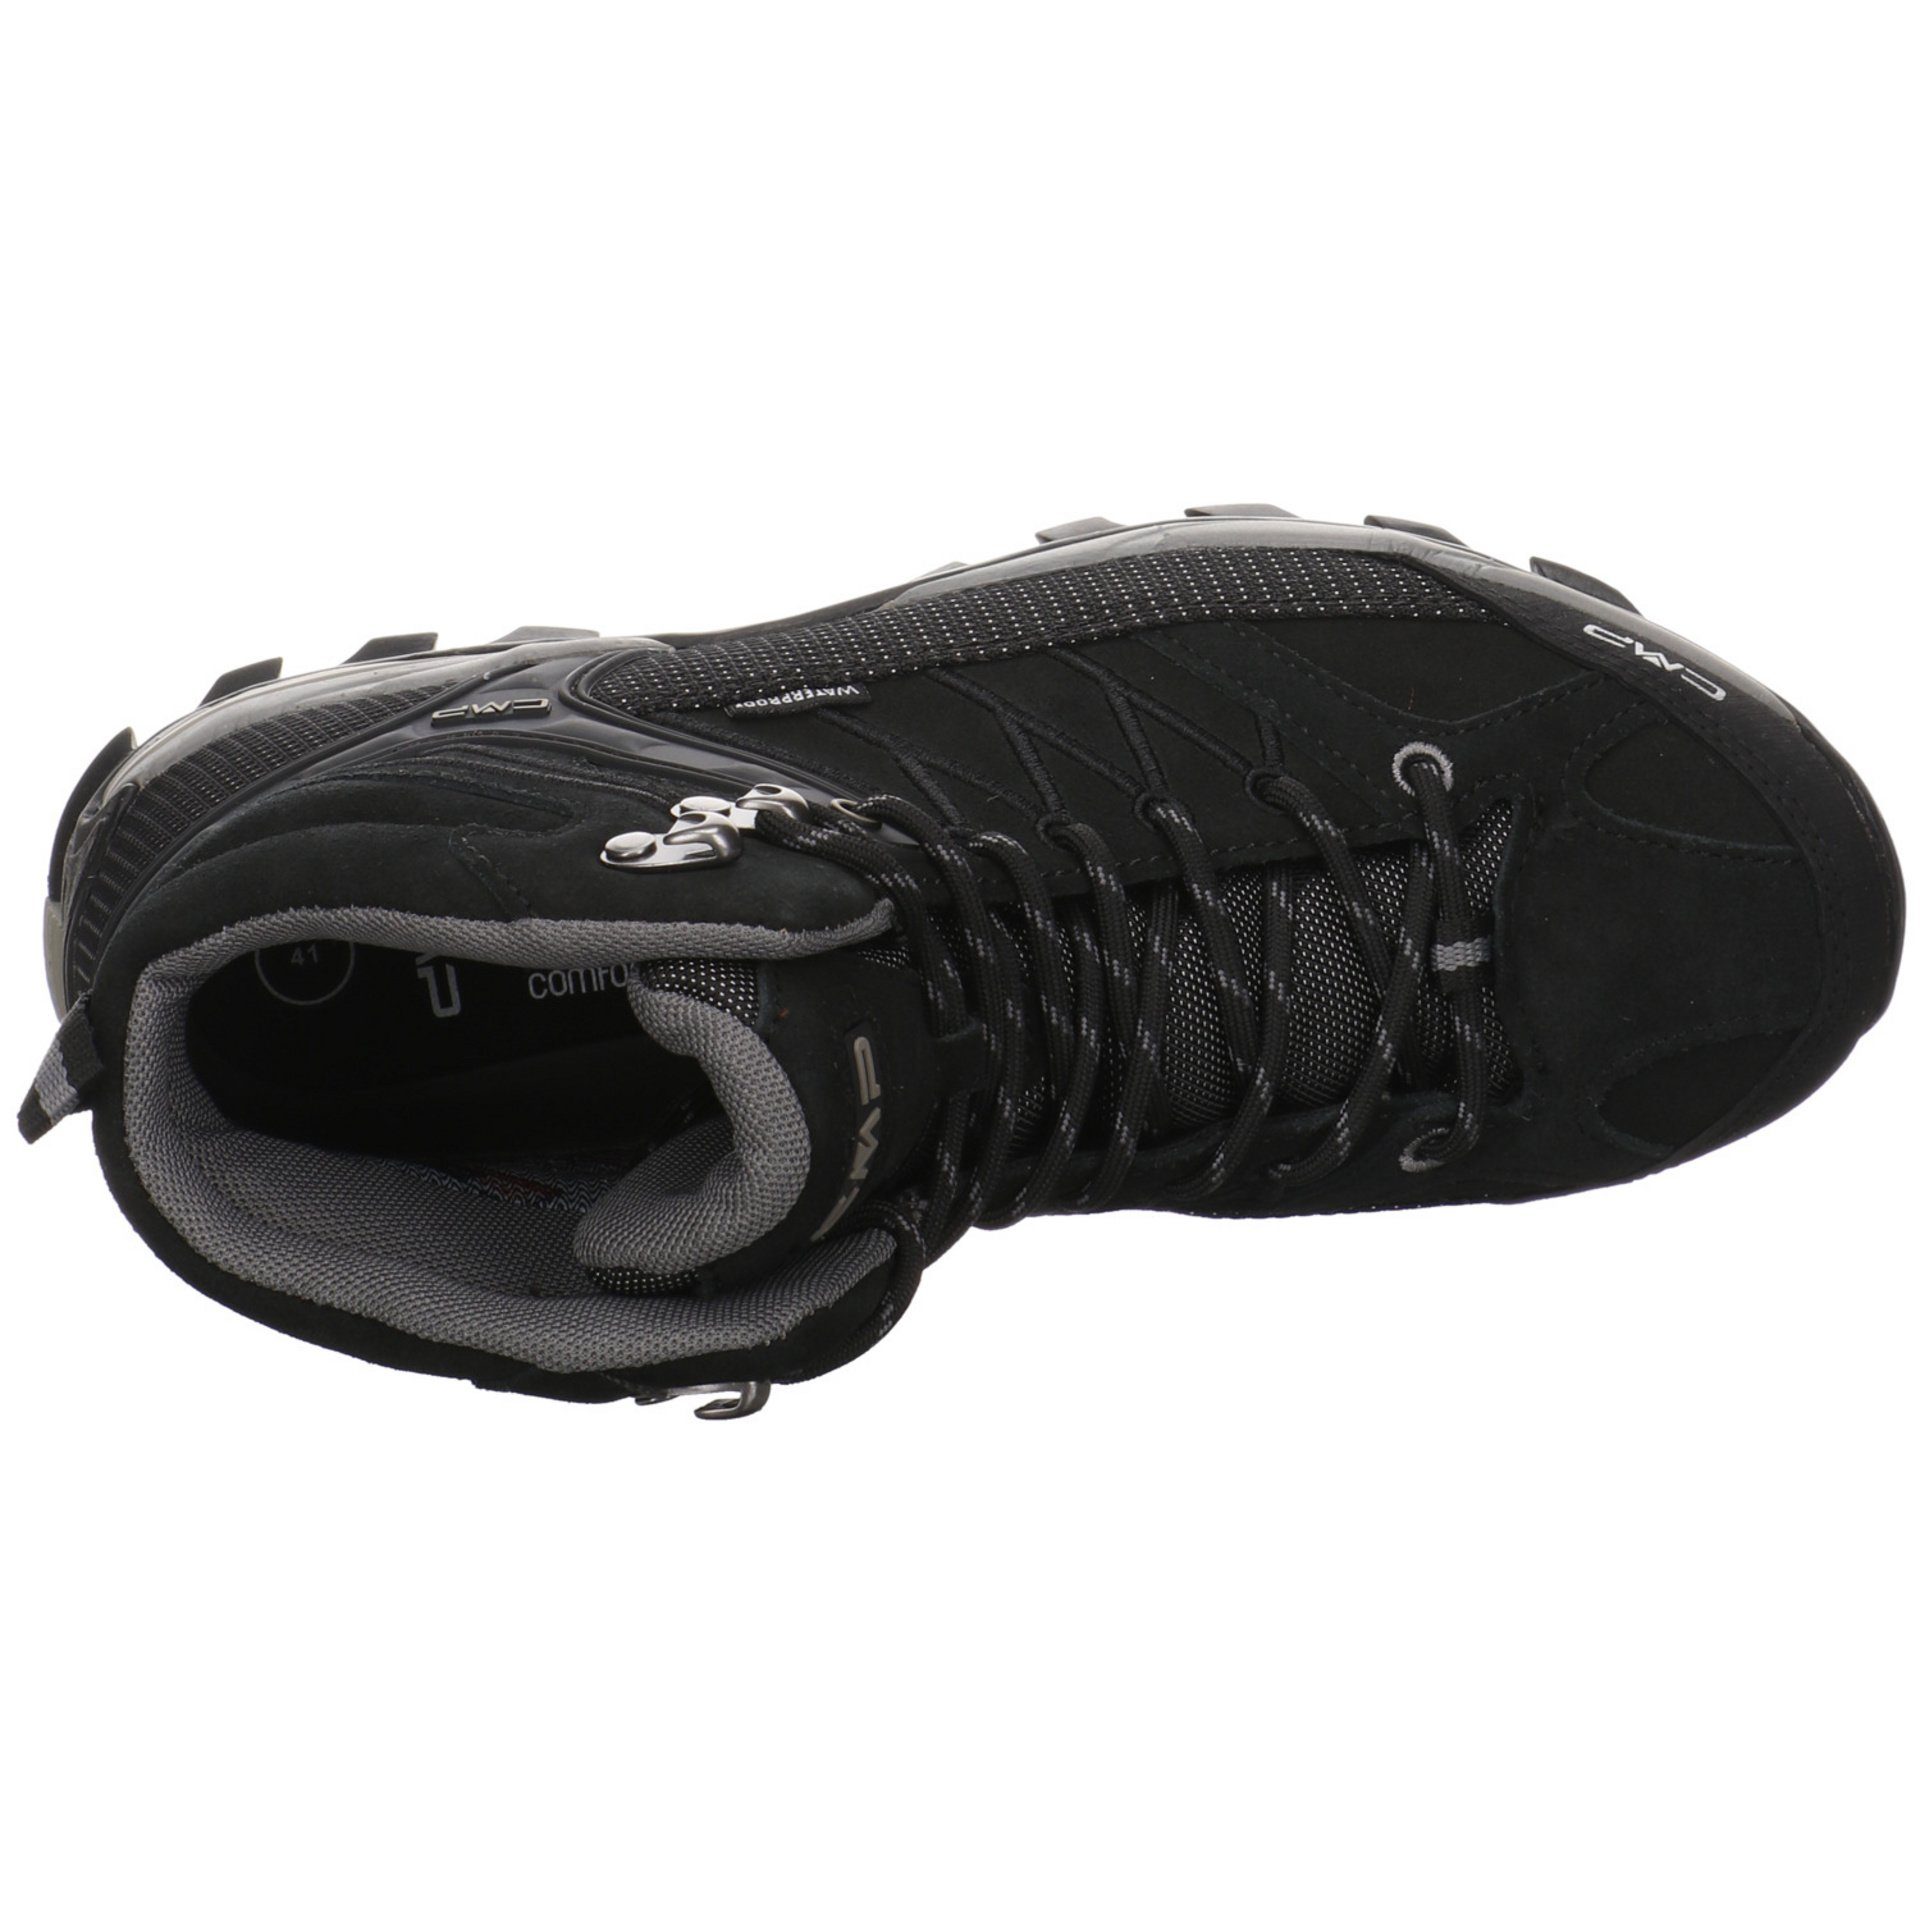 NERO-GREY Schuhe Leder-/Textilkombination Outdoor CMP Outdoorschuh Rigel Mid Outdoorschuh Herren